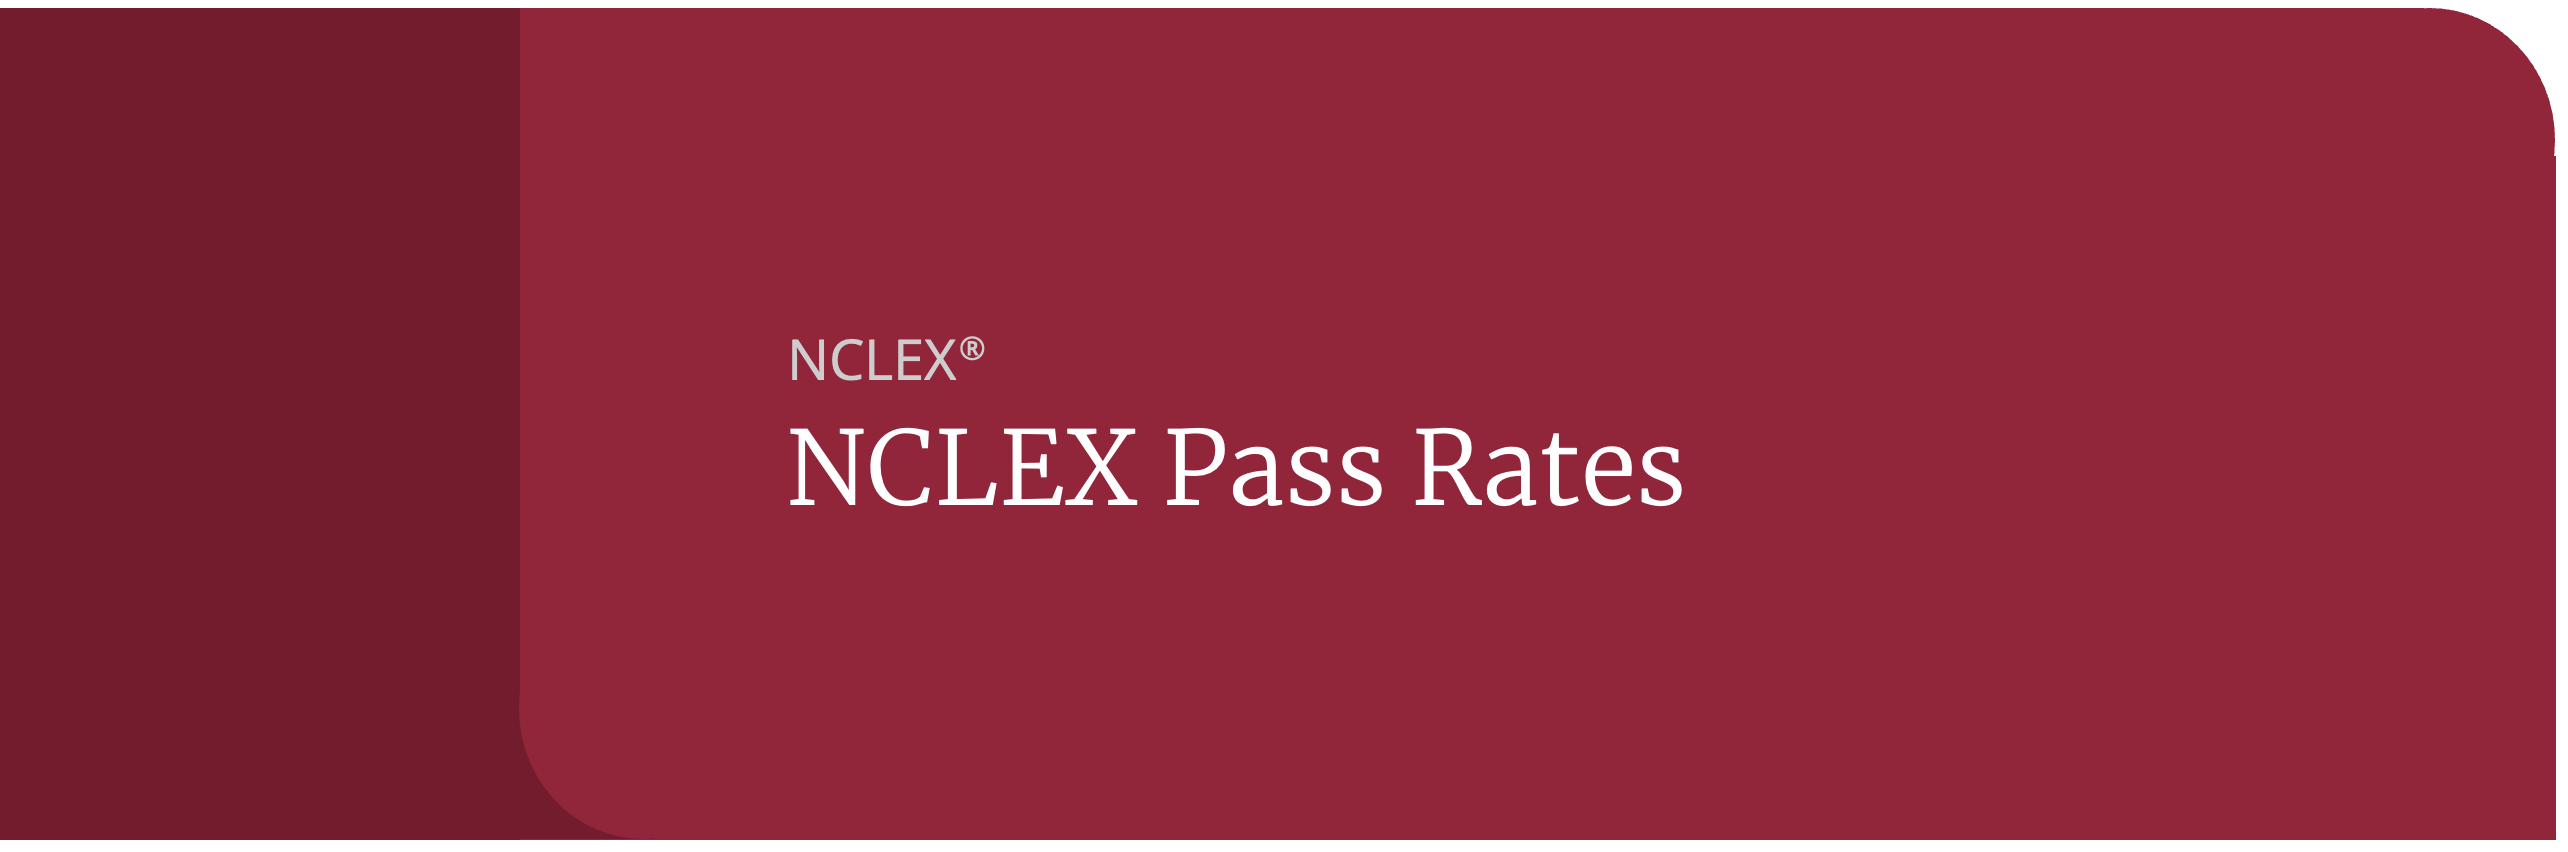 nclex pass rates